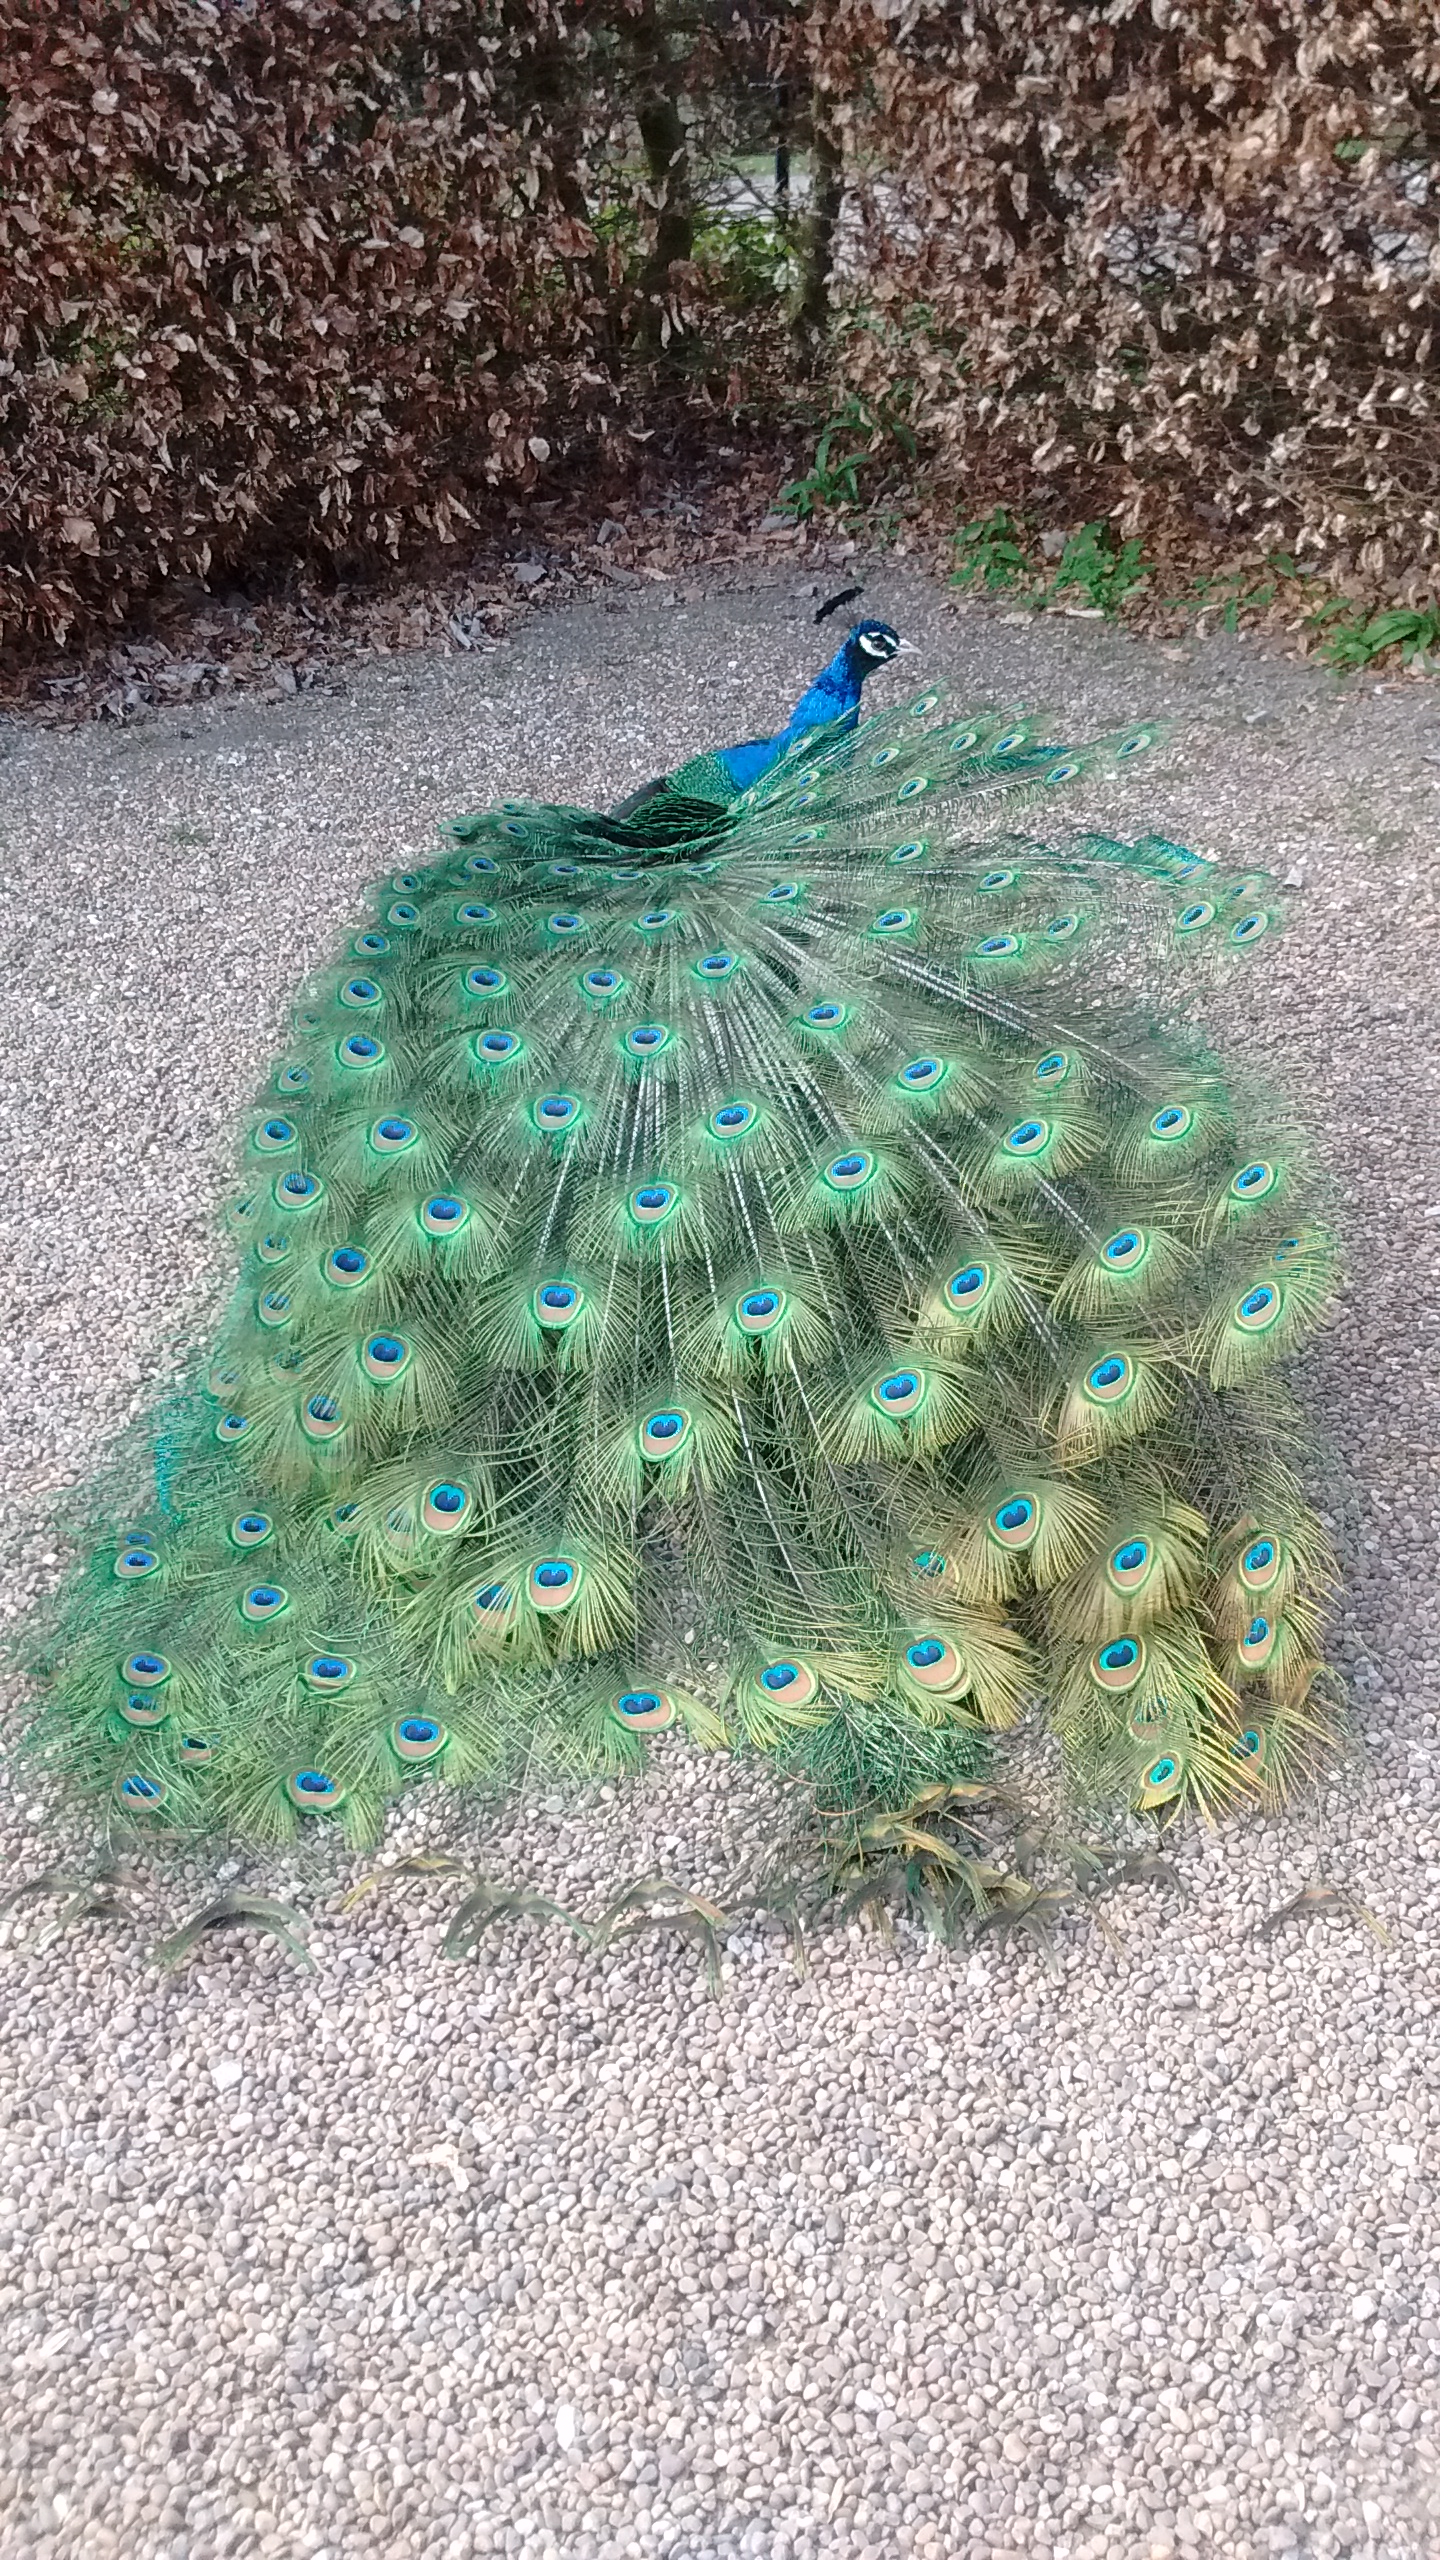 peacock3.jpg